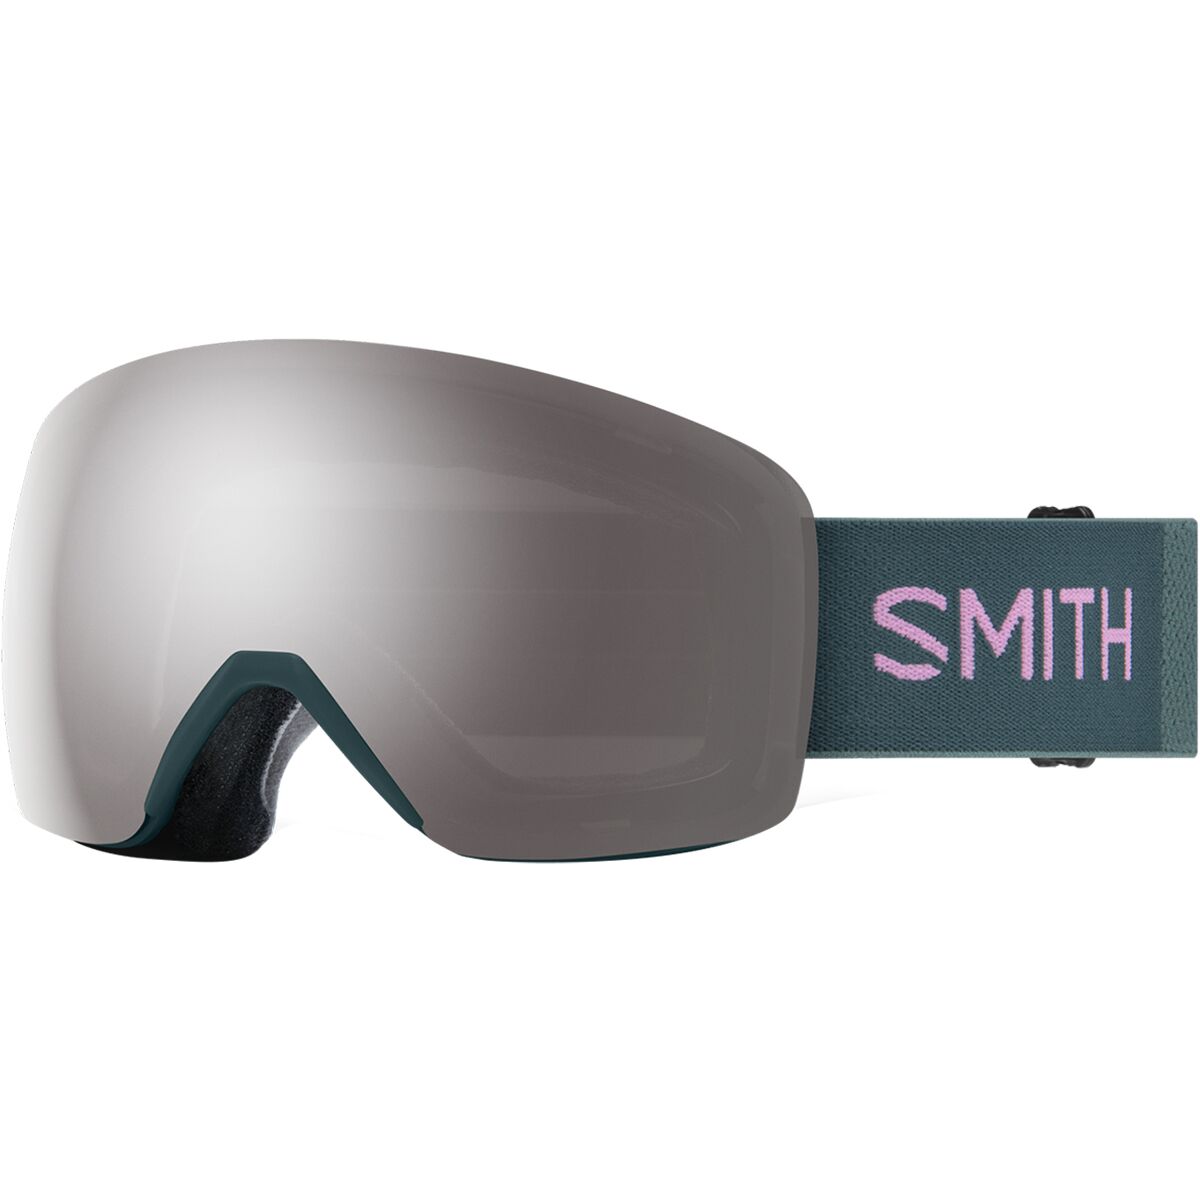 SMITH Skibrille Snowboard brille SQUAD Schneebrille 2021 black/chroma pop 